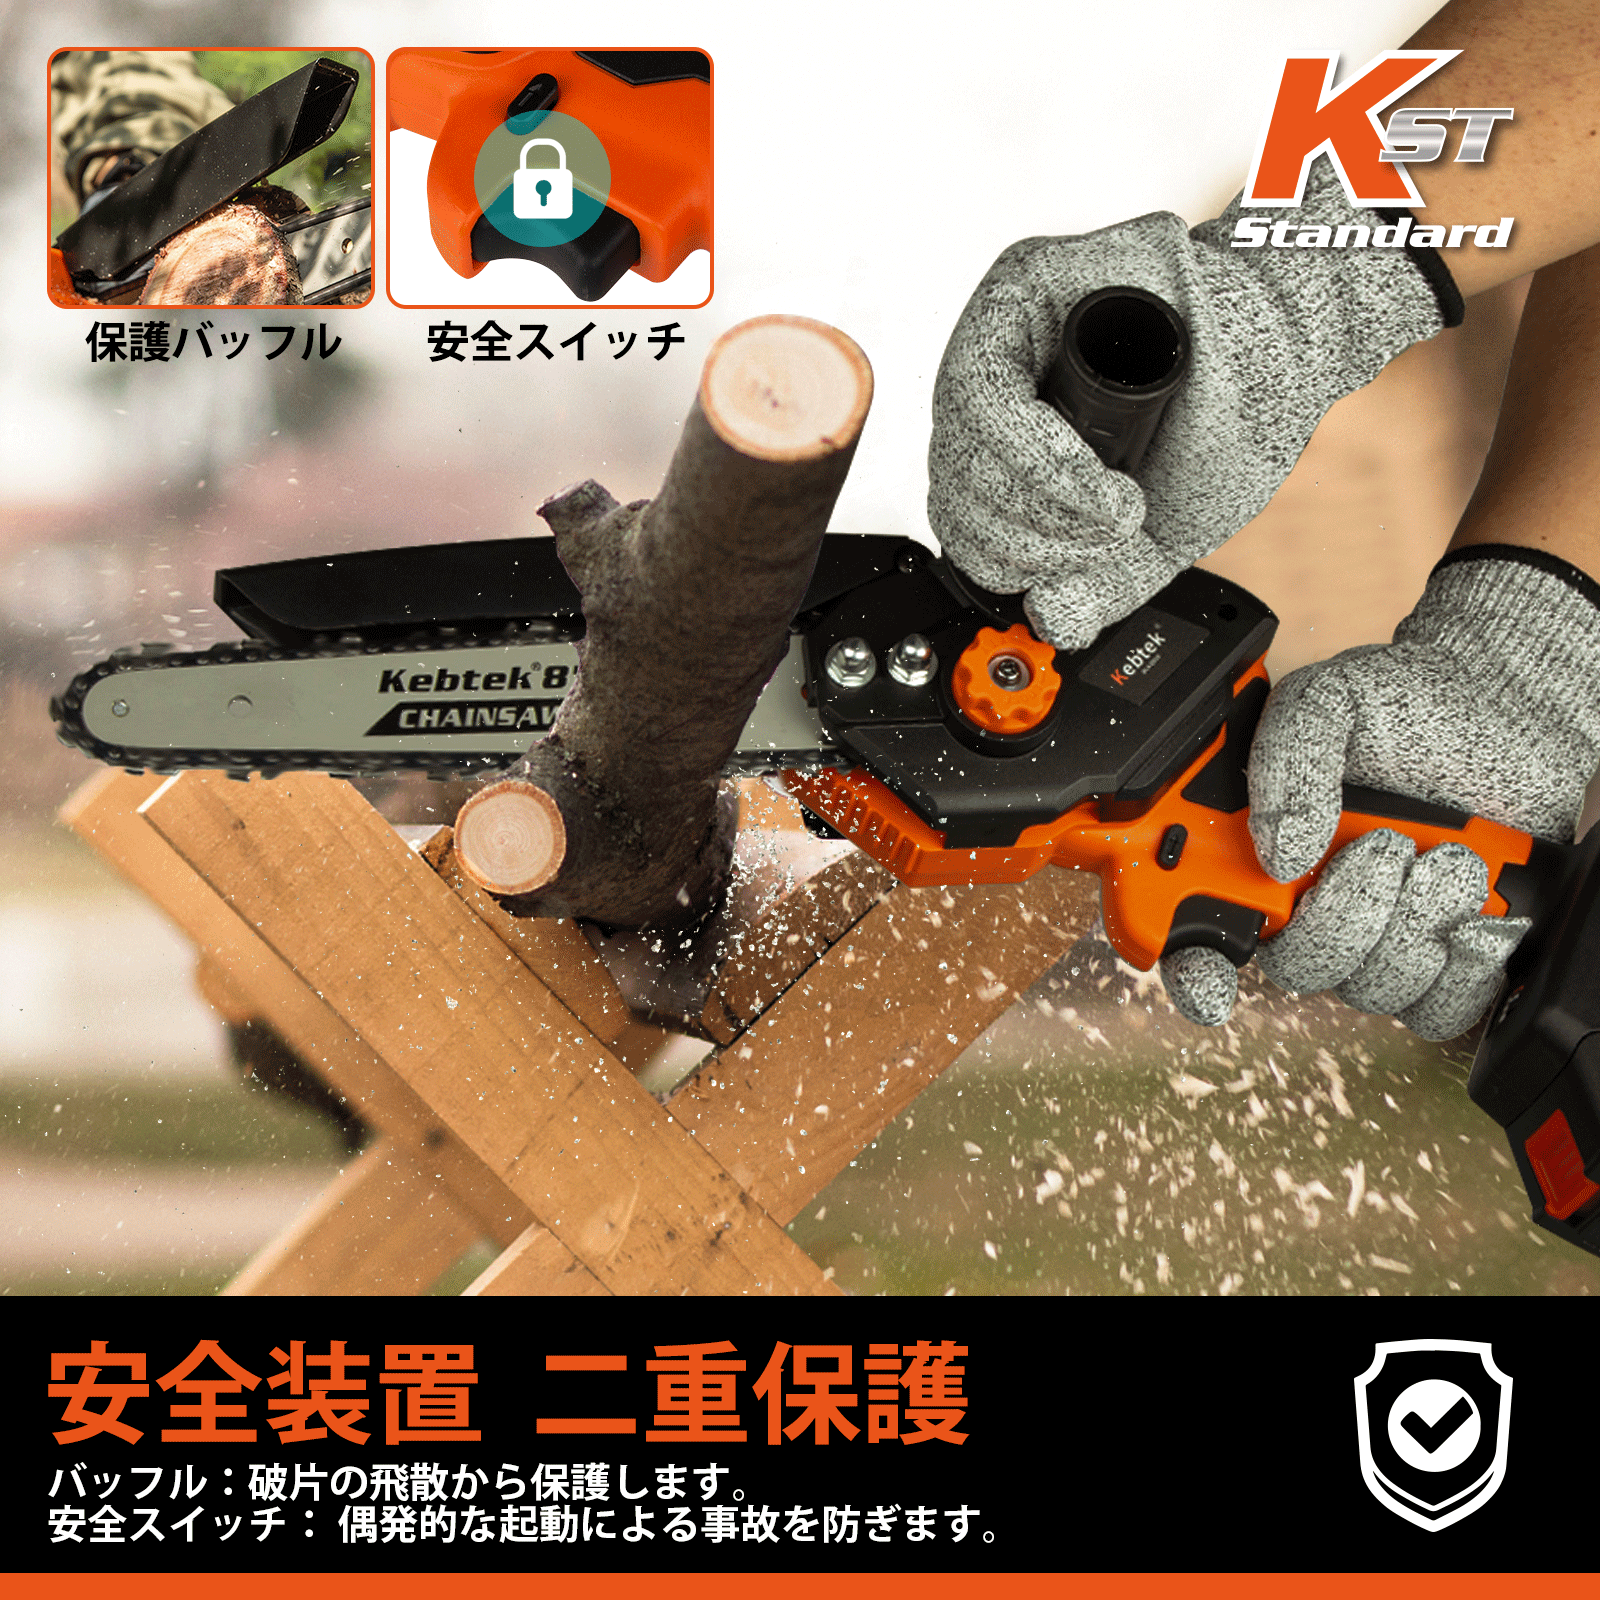 Kebtek 充電式 チェーンソー 8インチ 品番DLA-0016